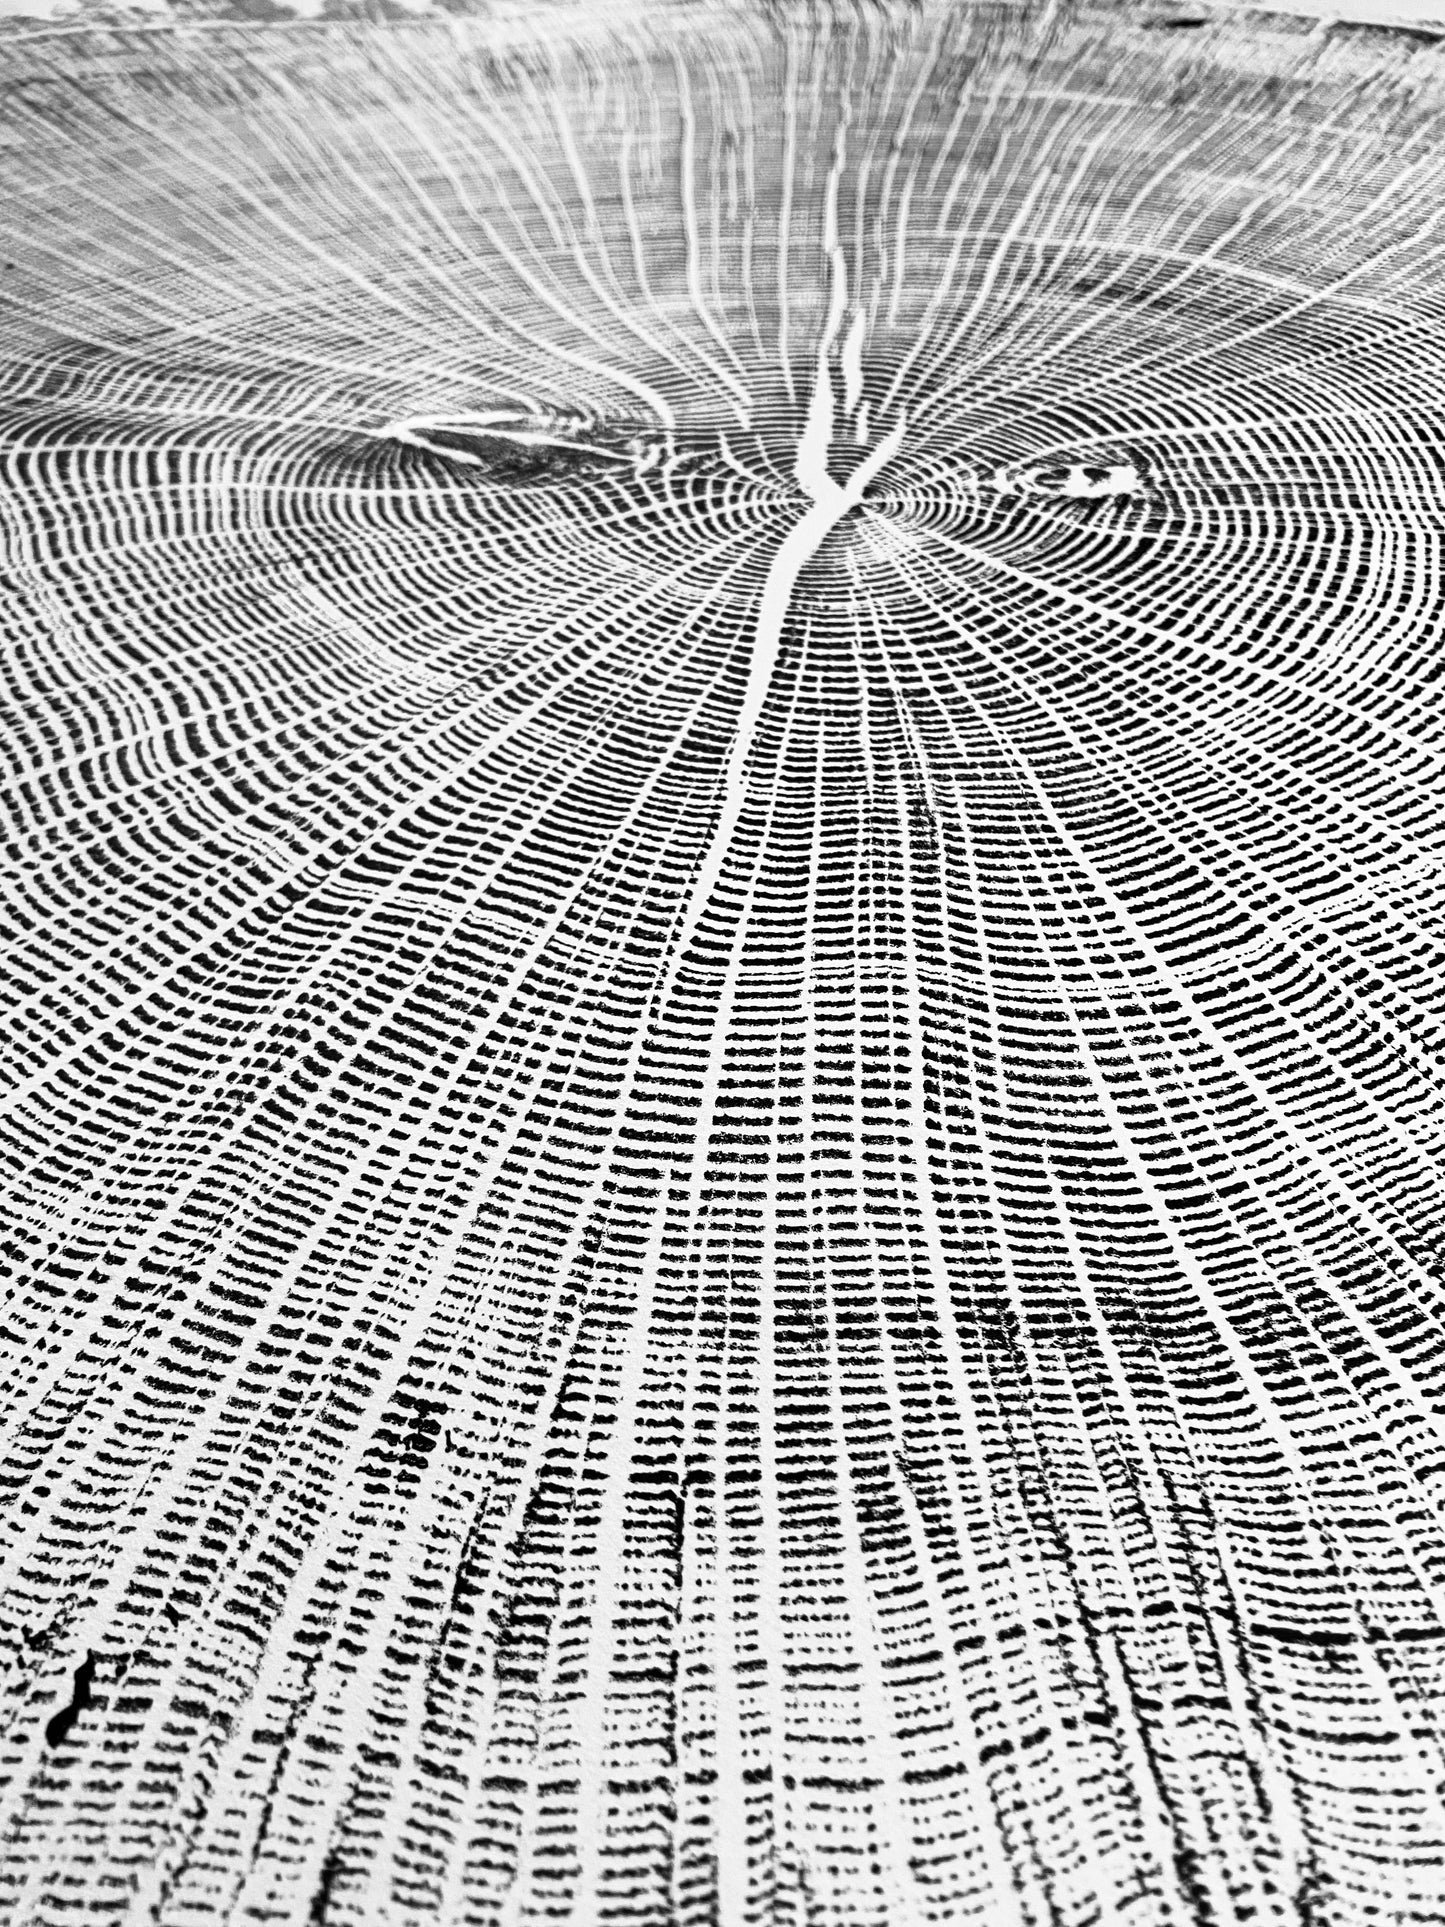 Giant Oak from Illinois, Tree ring art, oak tree art, hand pressed woodblock print, Illinois Tree, 42x46 inches